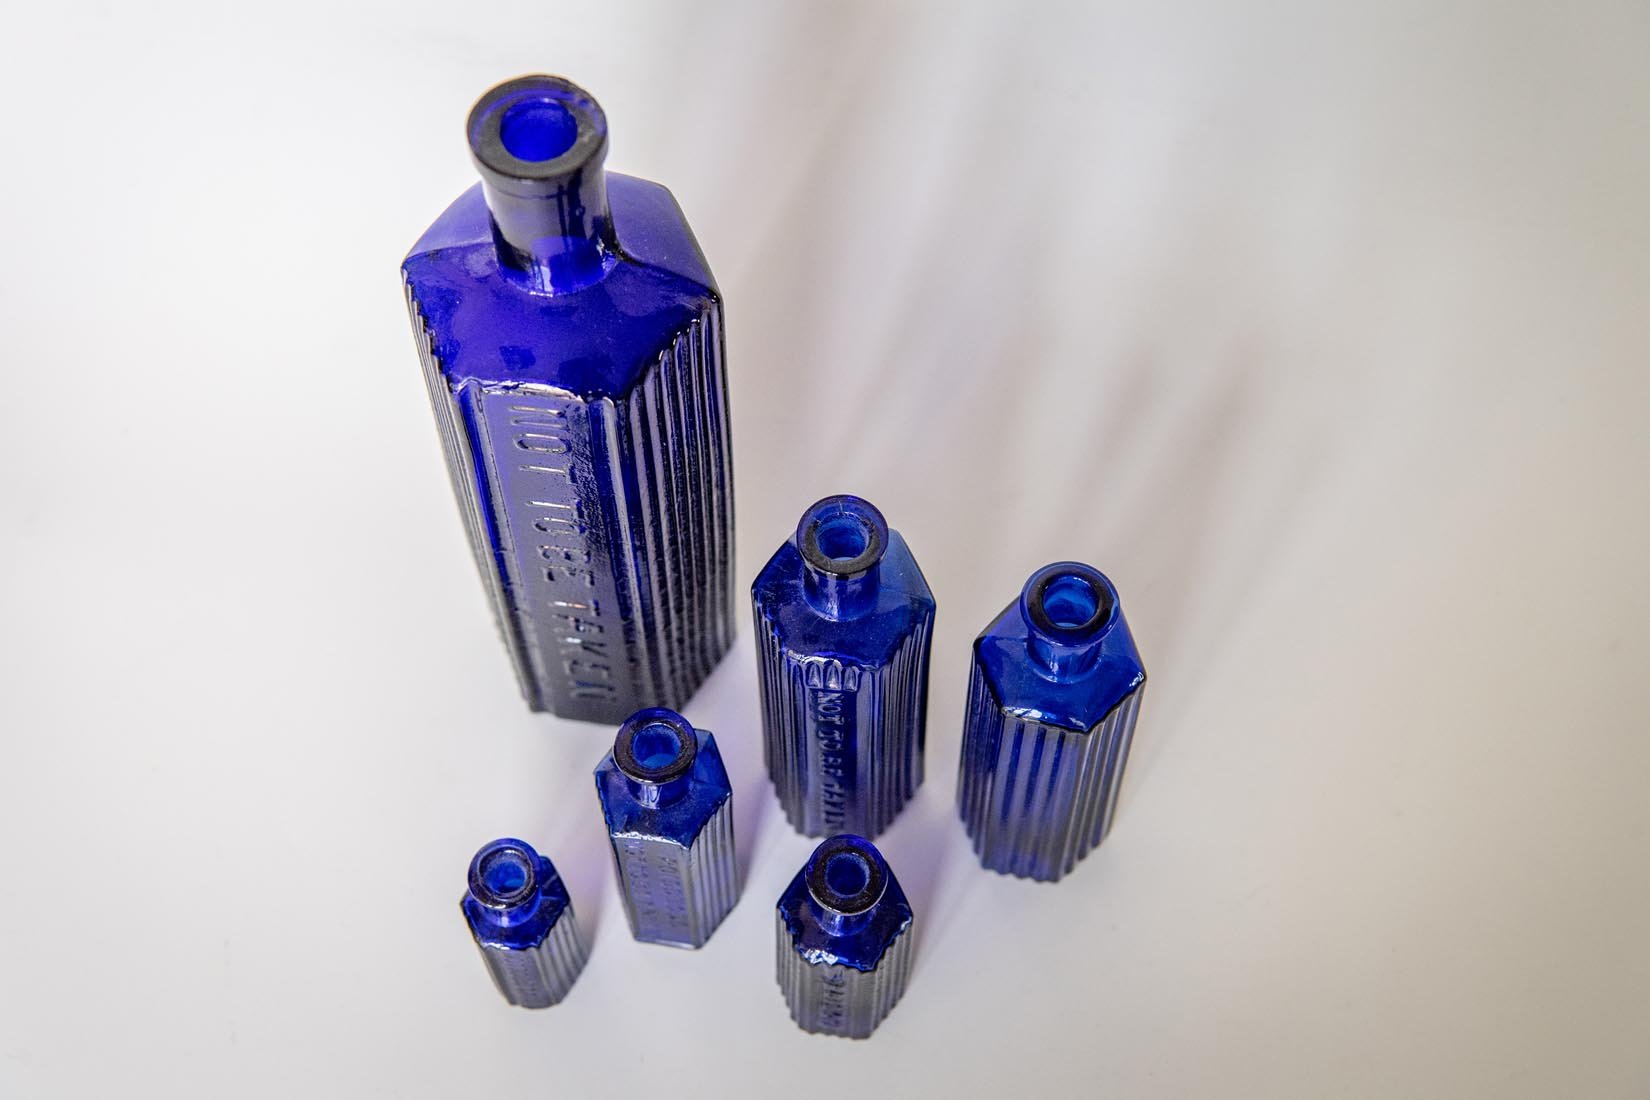 Antique glass cobalt blue collection of octagonal poison bottles - Natalia Willmott